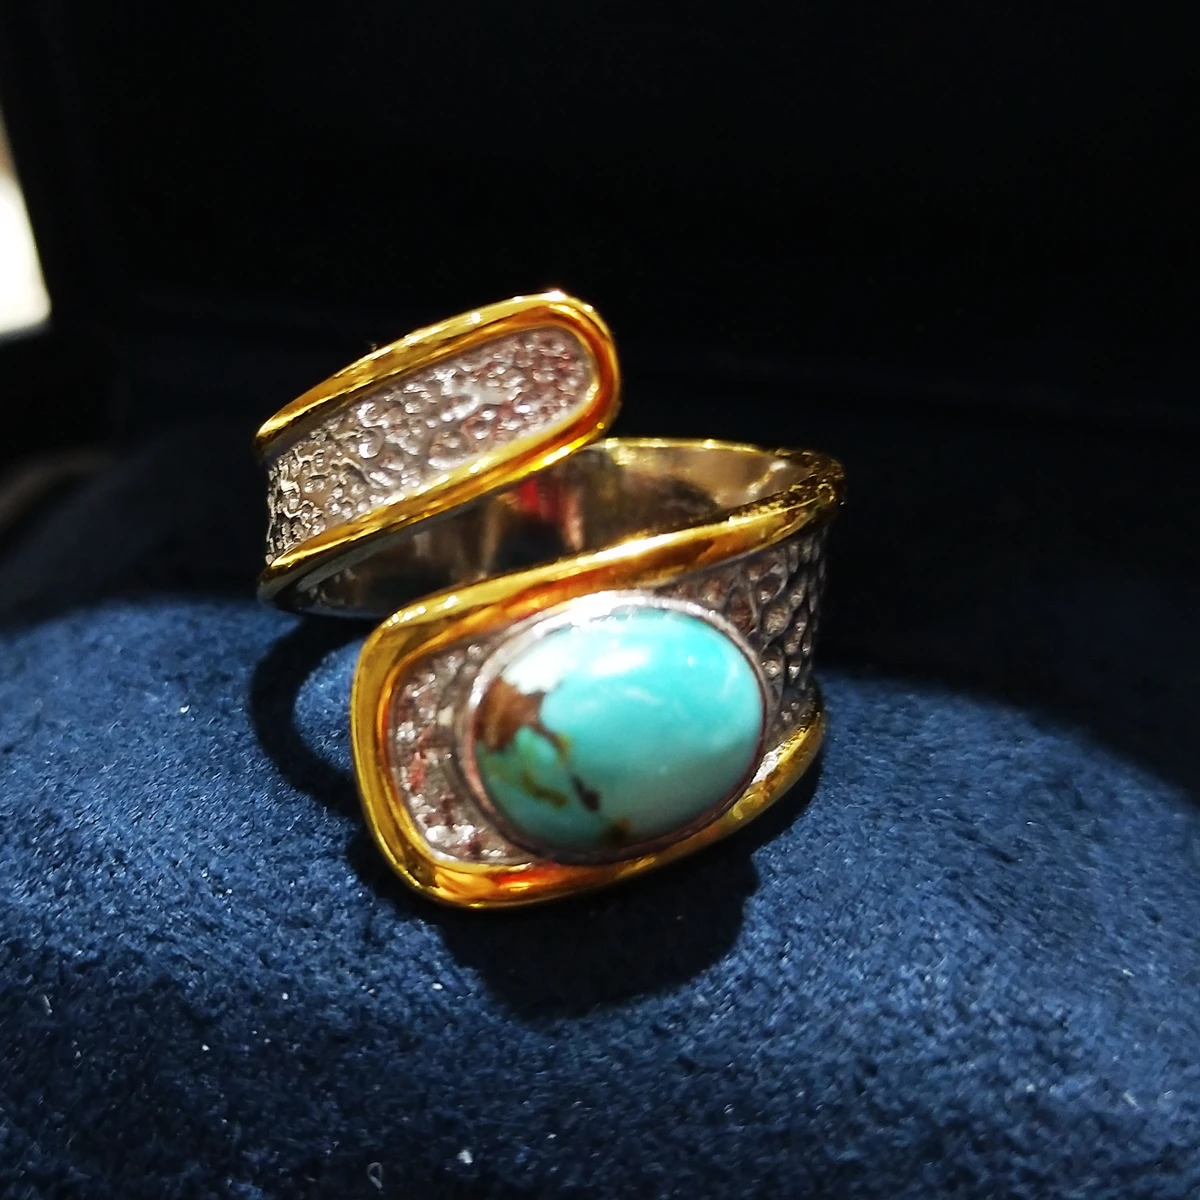 Lii Ji-Anillo de Plata de Ley 925 con zafiro turquesa, anillo ajustable con diseño geométrico, piedra Natural, Estilo Vintage